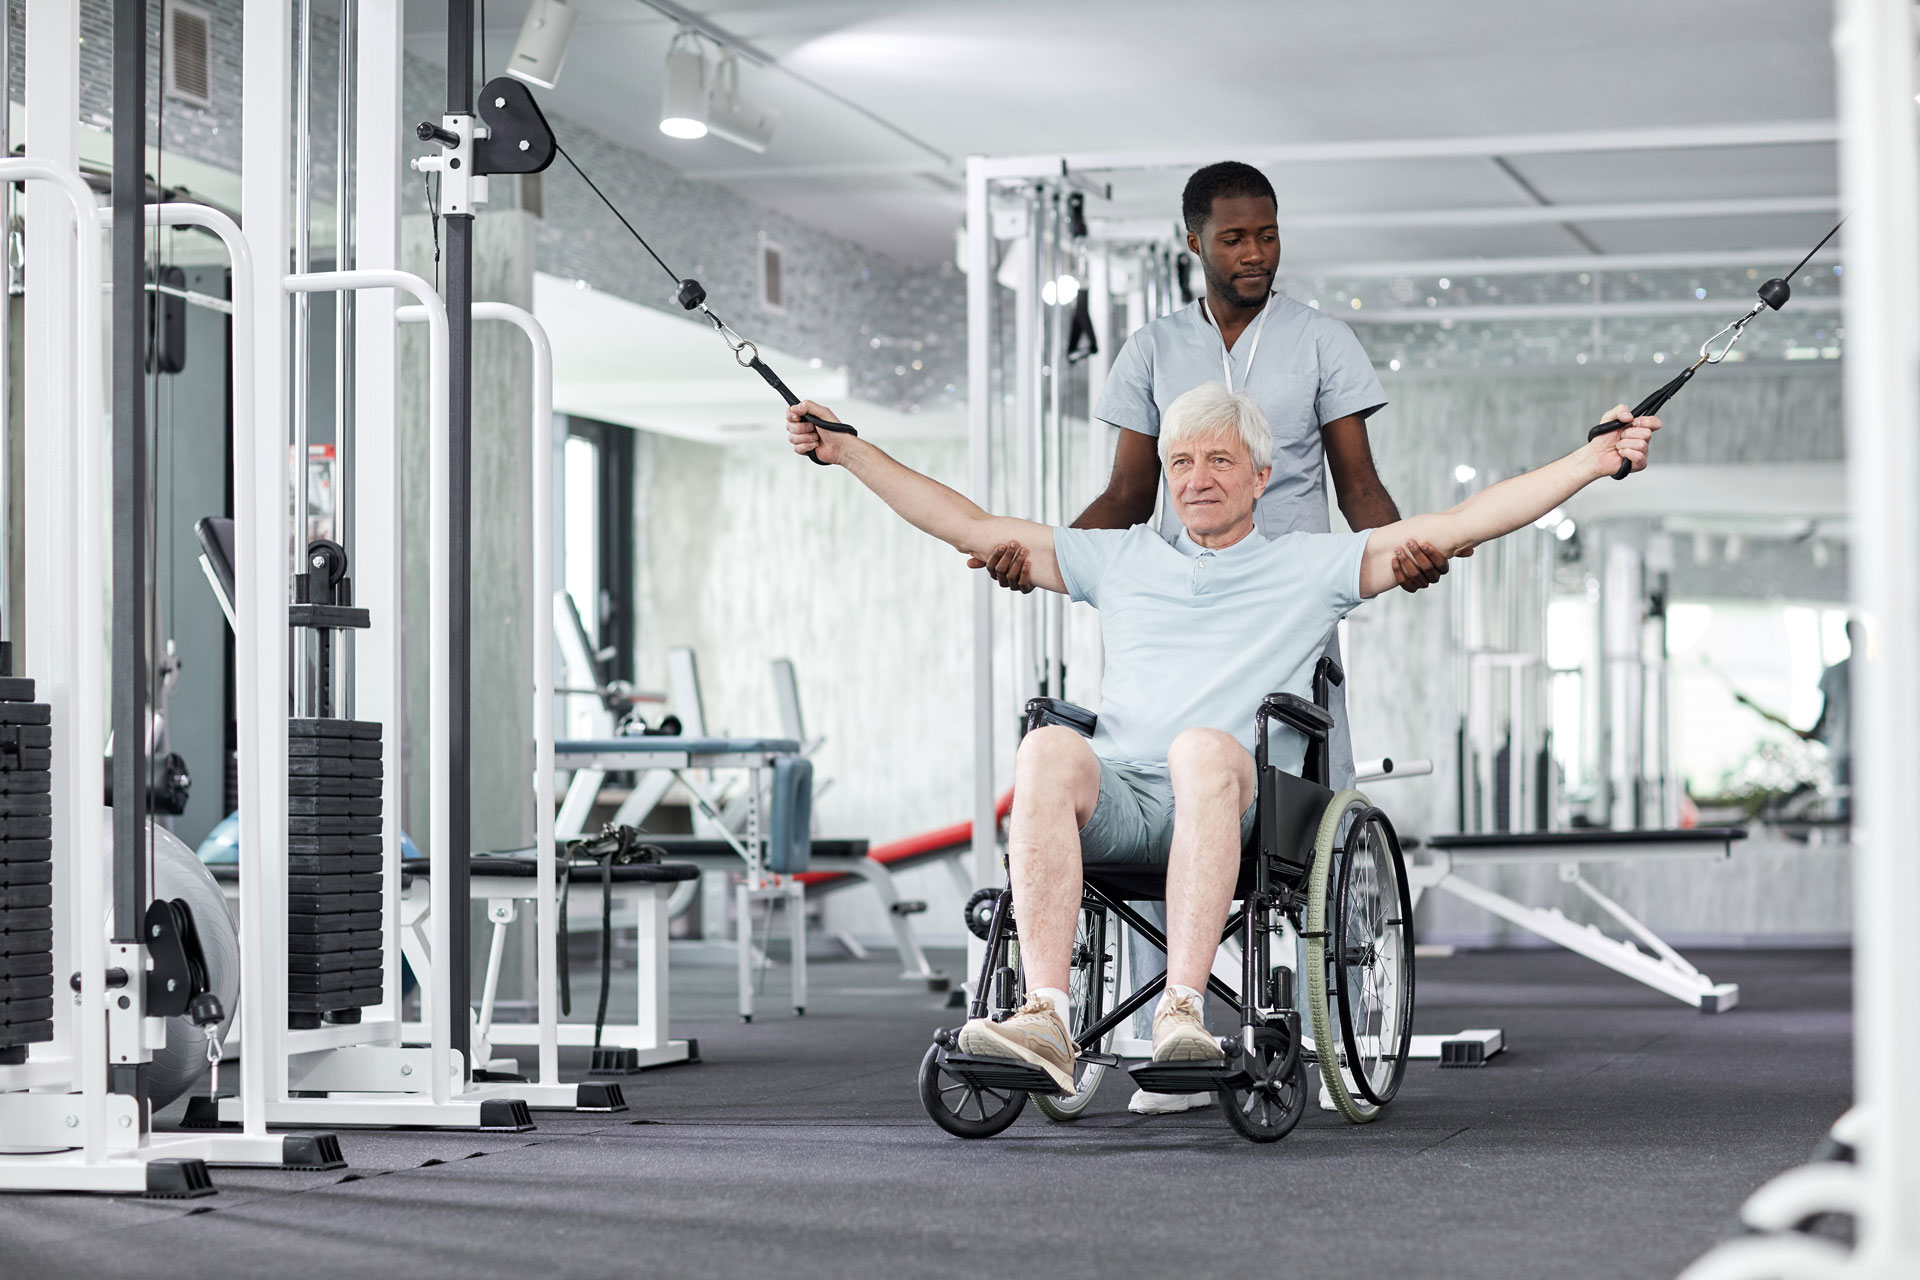 https://secambca.com/wp-content/uploads/2023/01/senior-man-in-wheelchair-doing-rehabilitation-exer-2022-05-01-23-06-04-utc.jpg